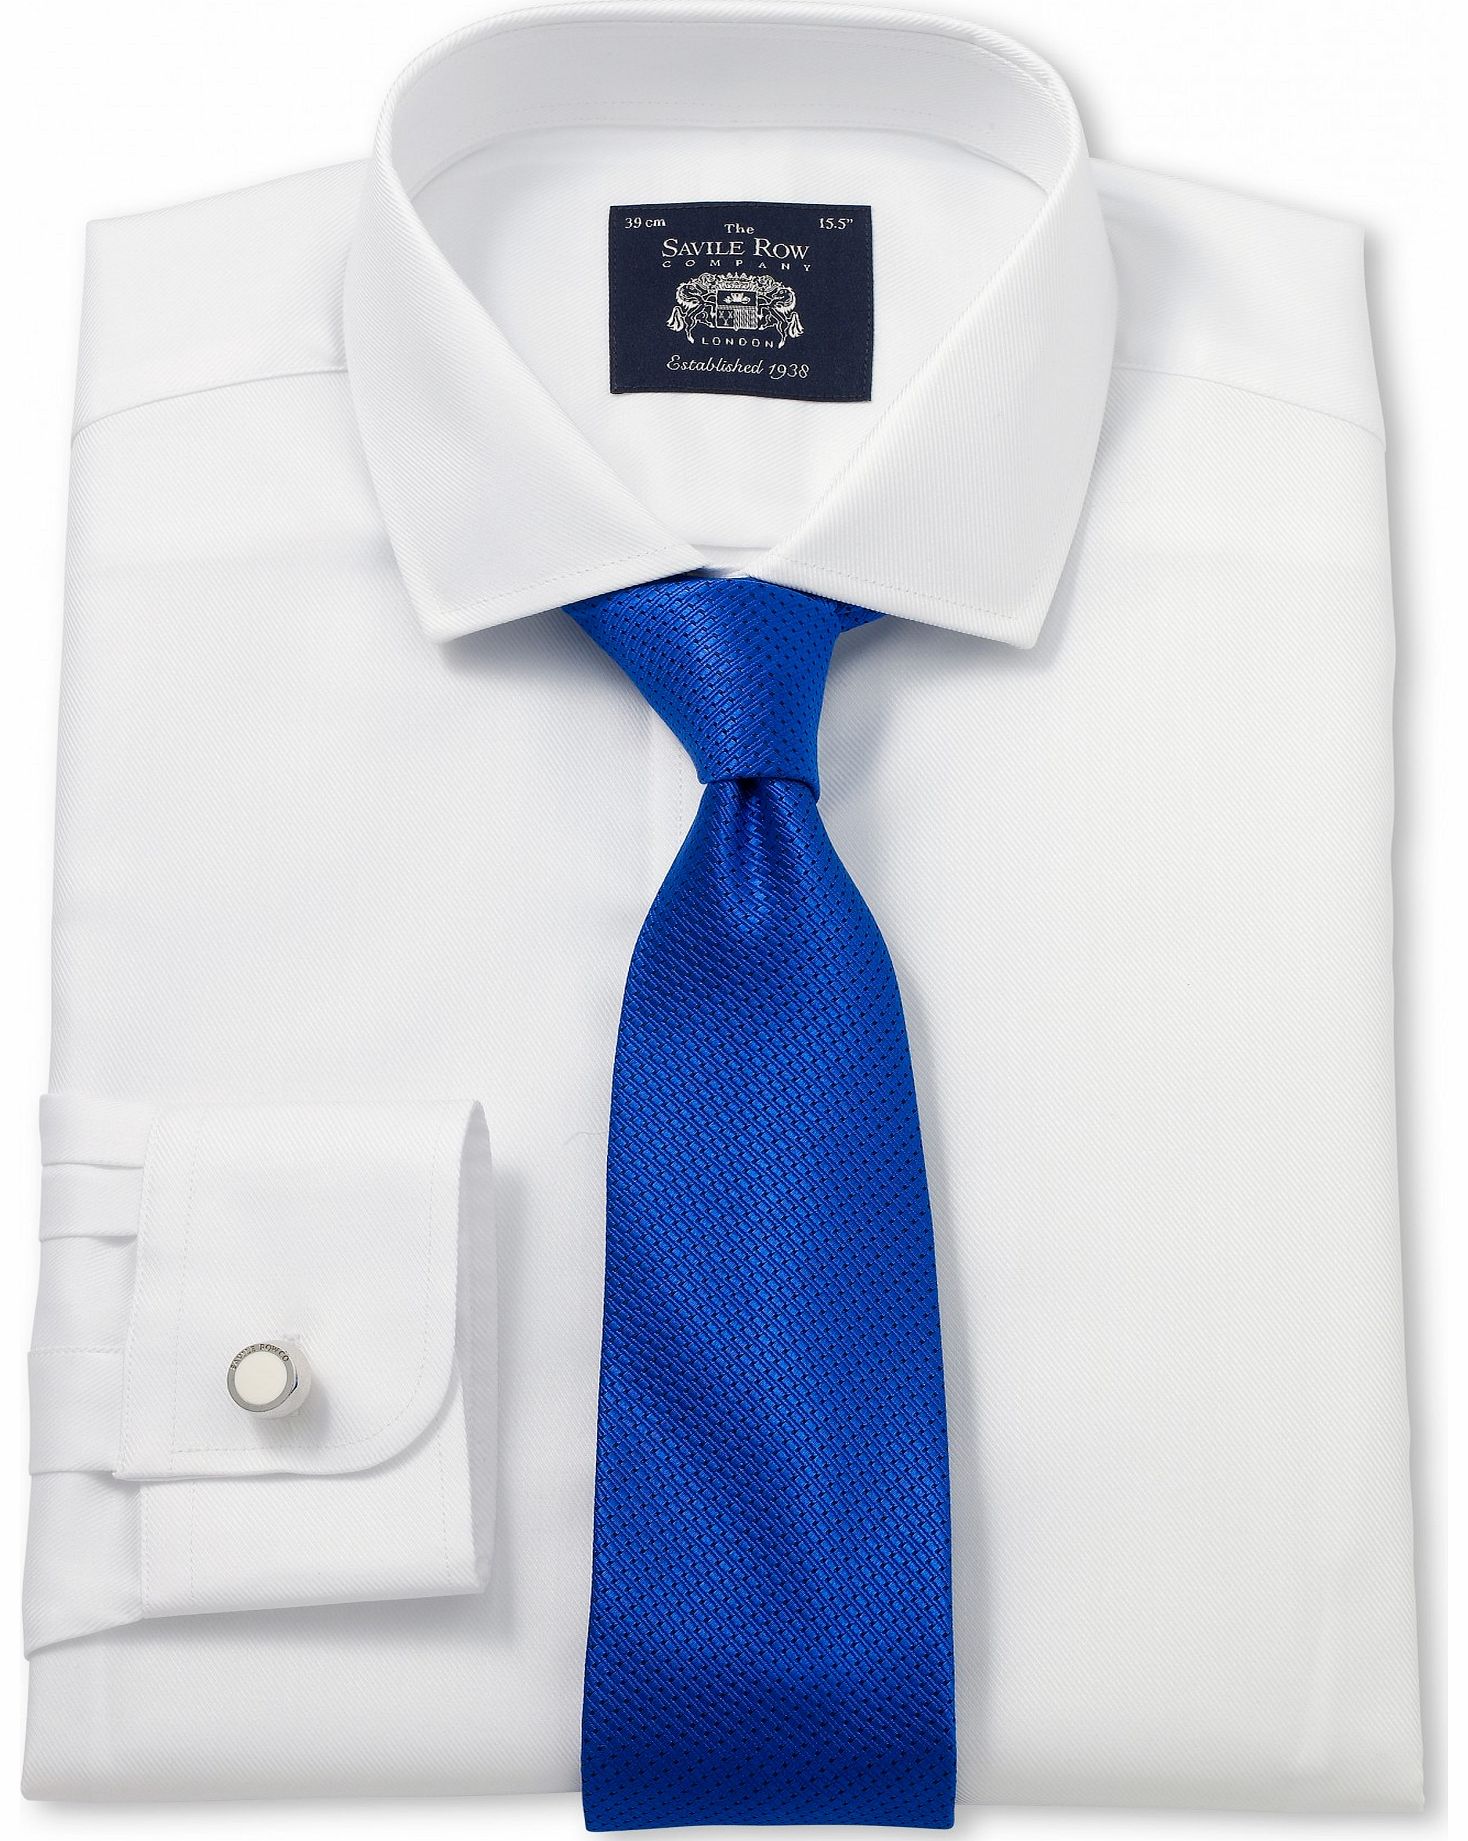 Savile Row Company White Royal Twill Non Iron Extra Slim Fit Shirt